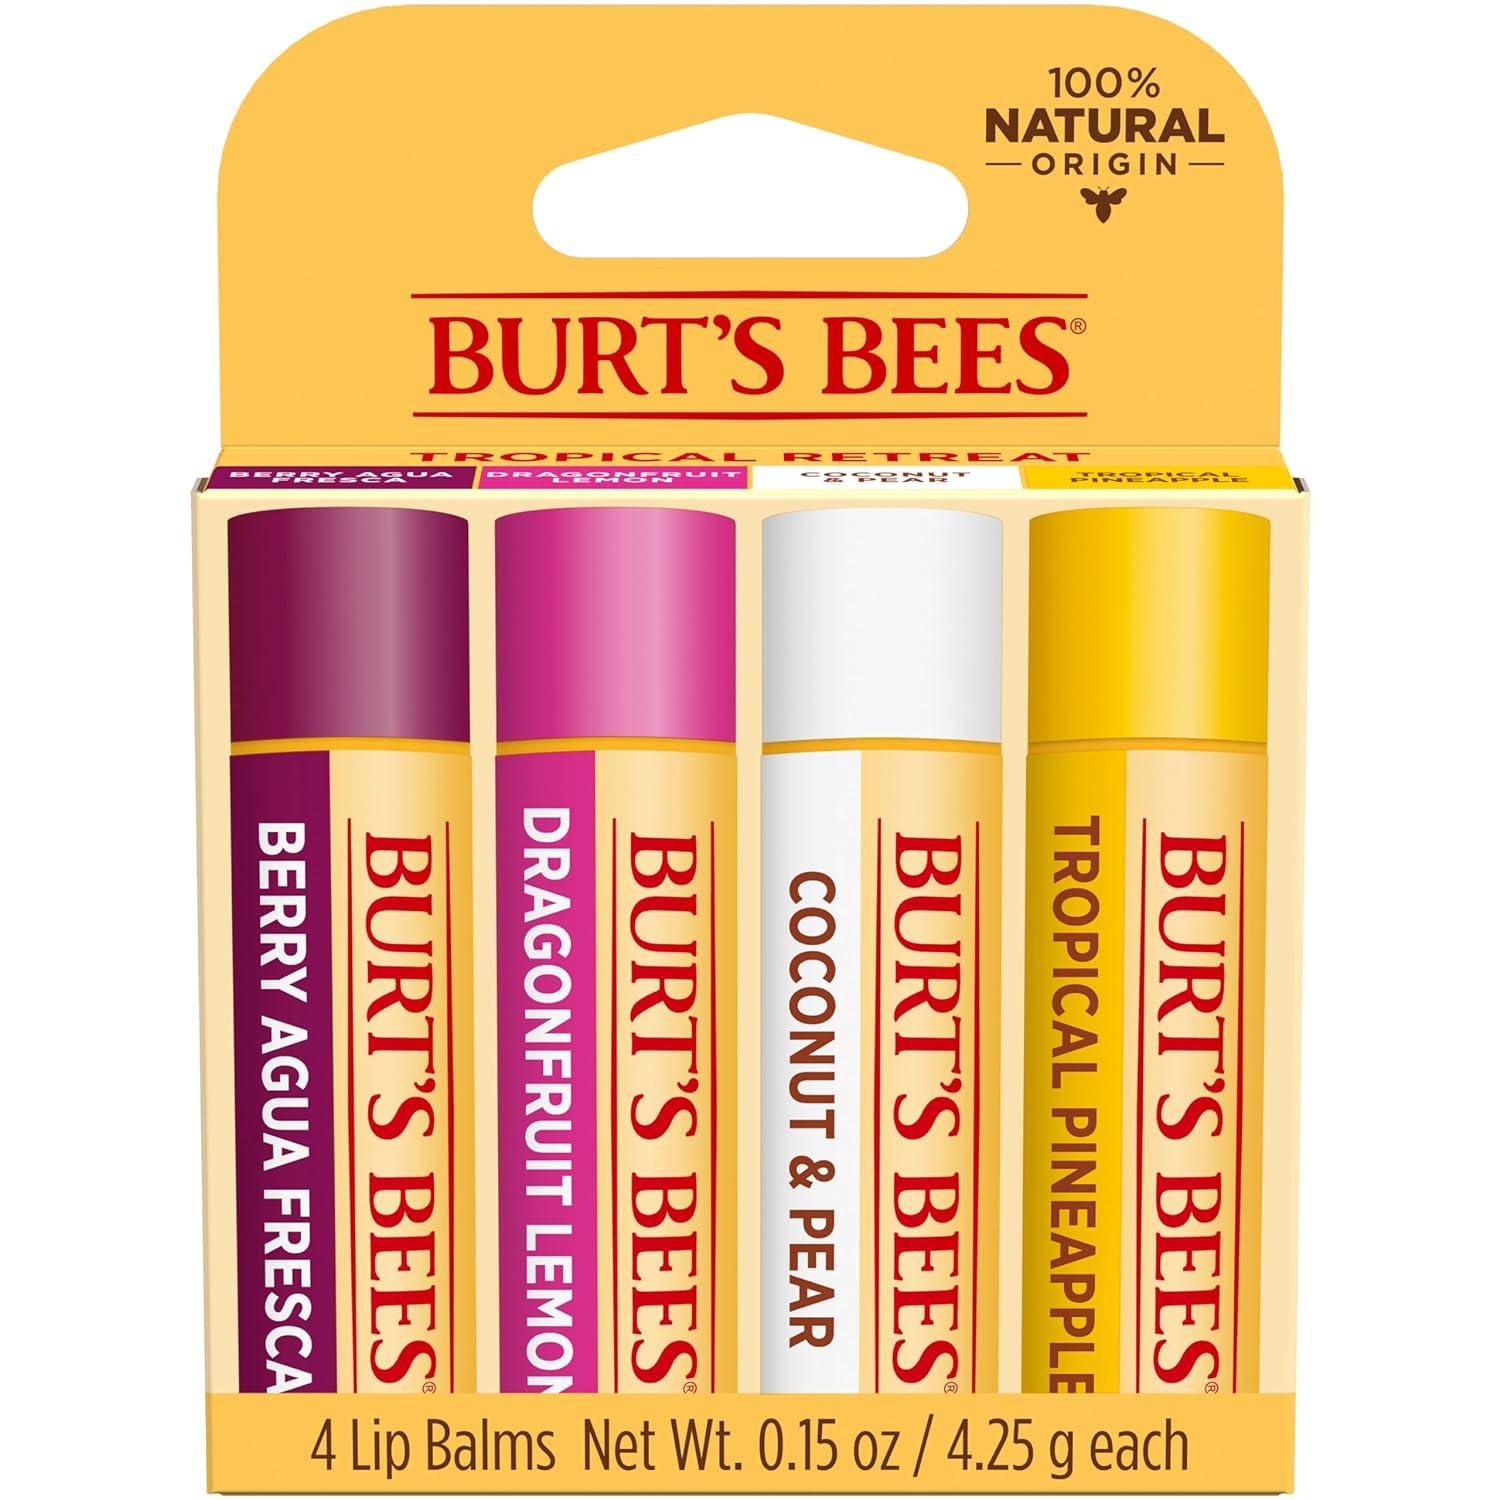 Burts Bees Lip Balm 4 Pack Deals